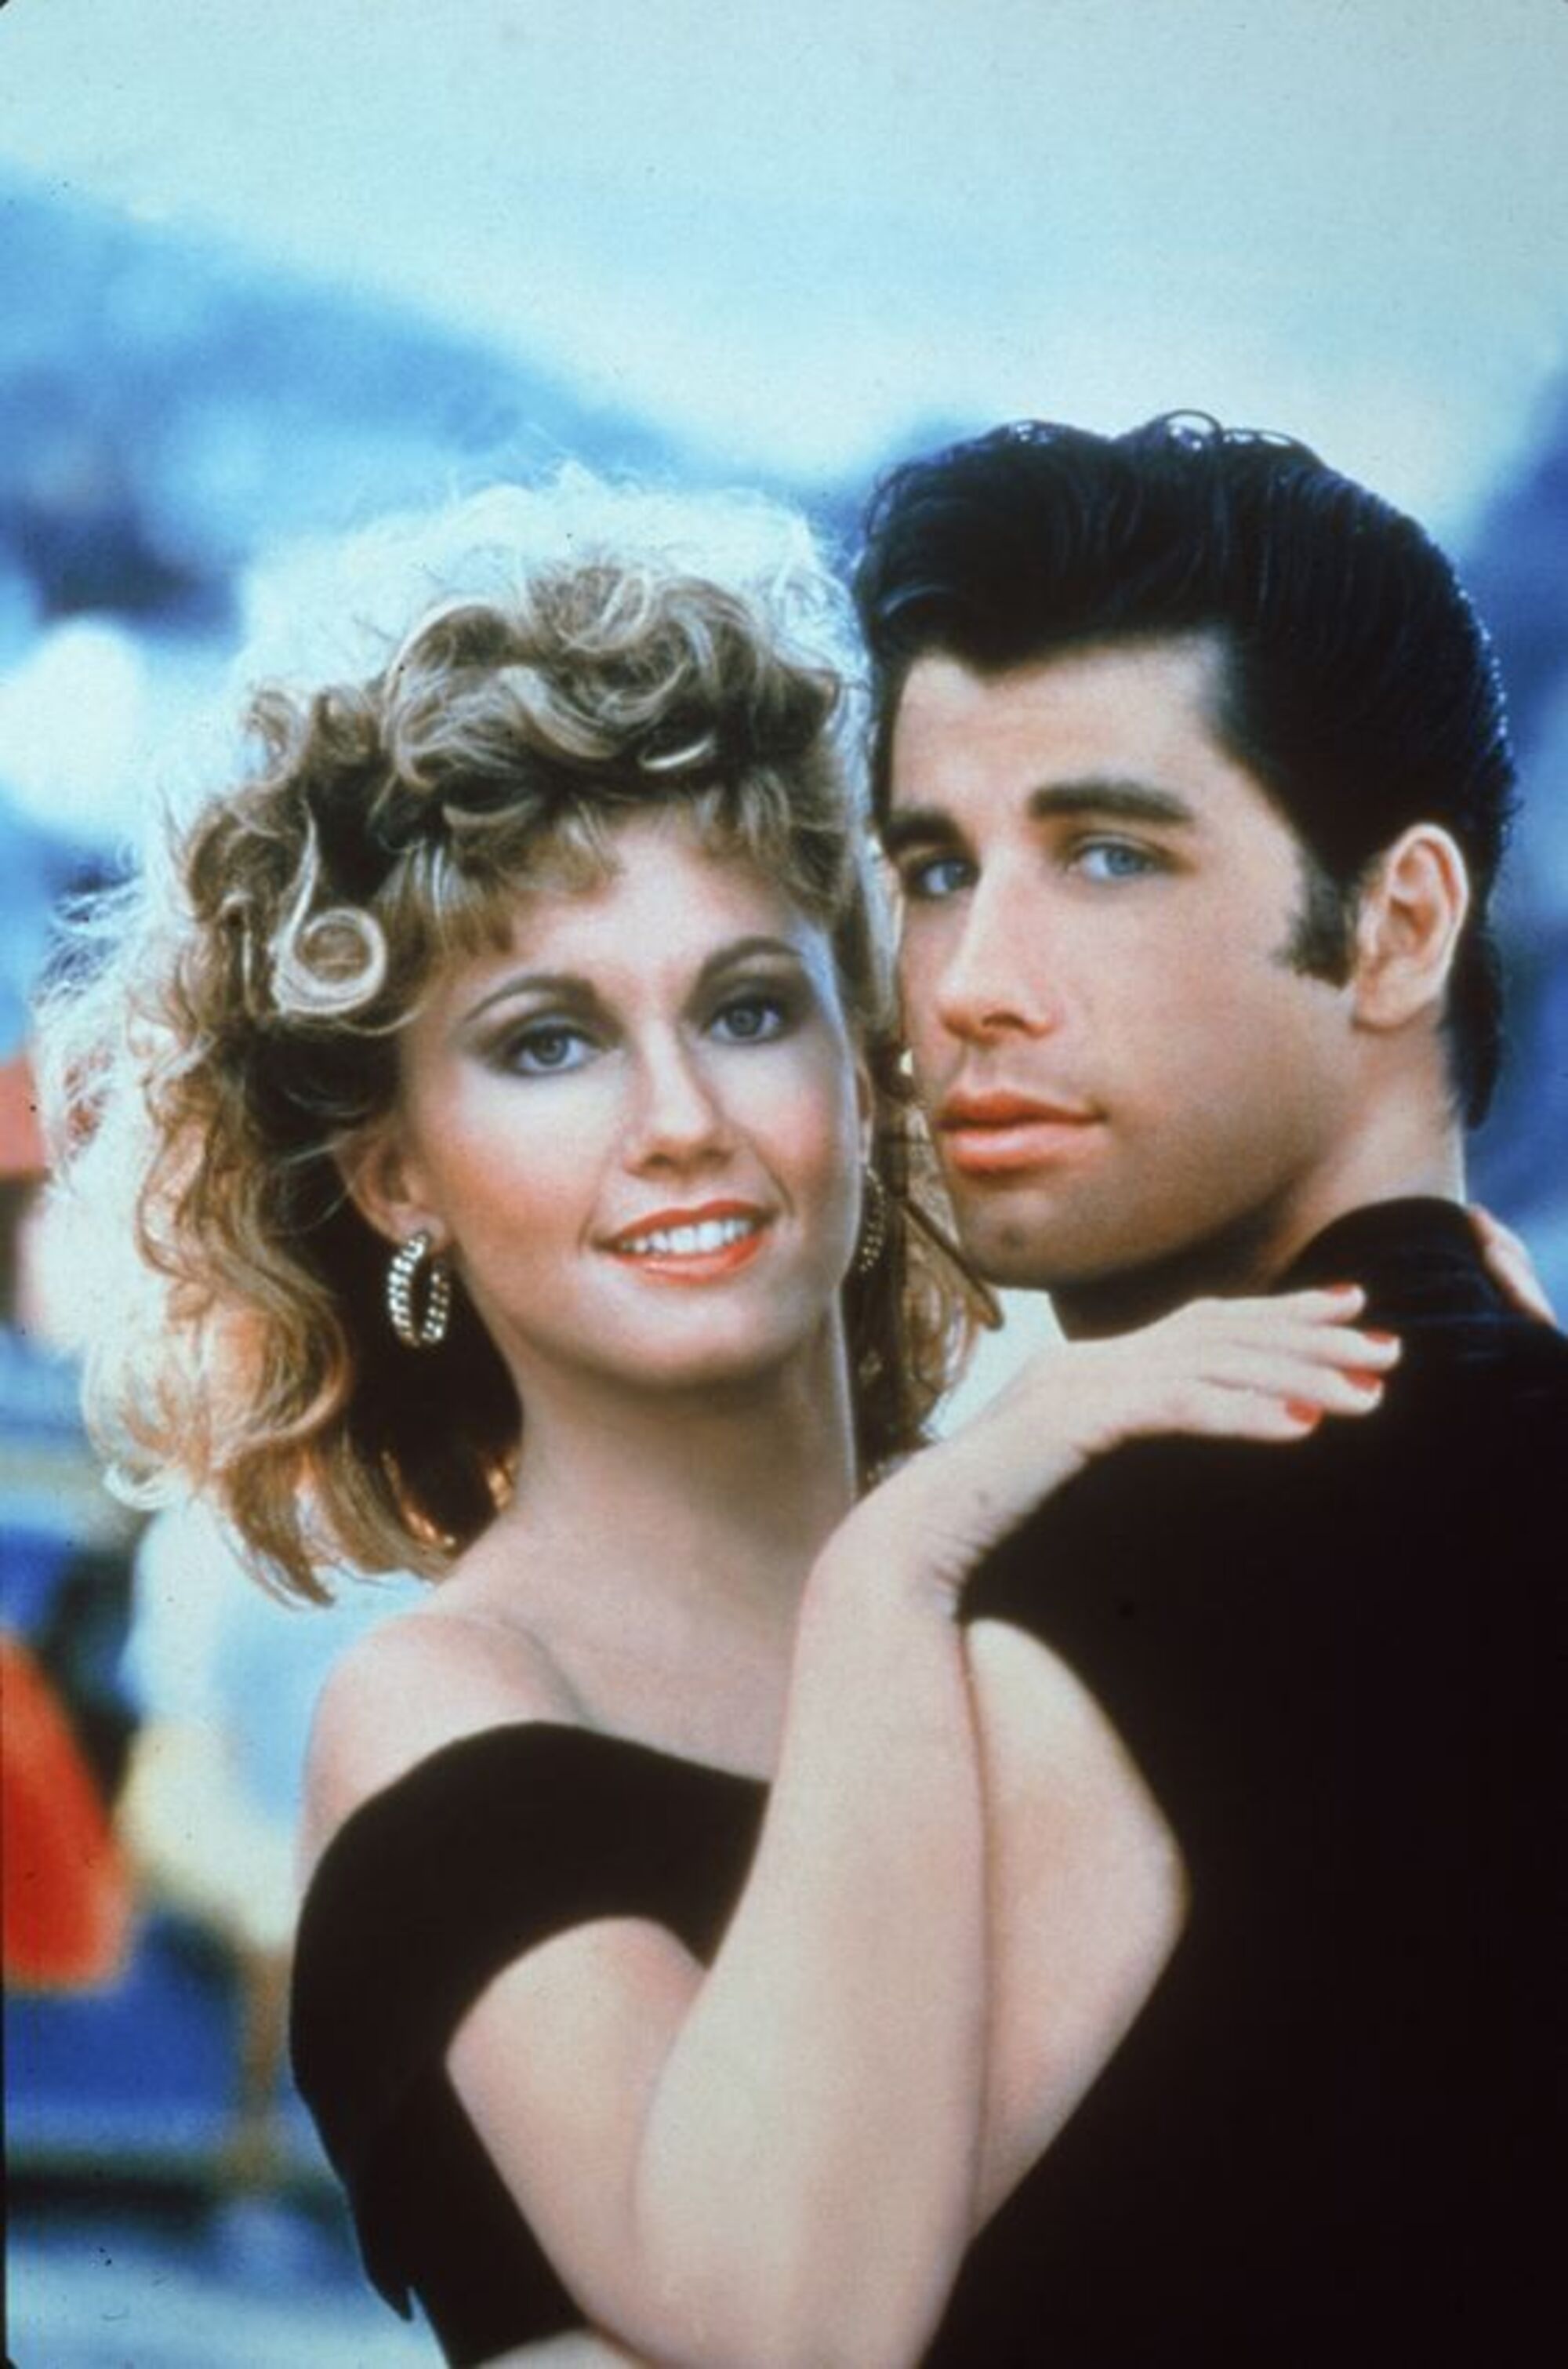 El emotivo adiós de John Travolta a Olivia Newton-John: "Tu John, tu Danny"